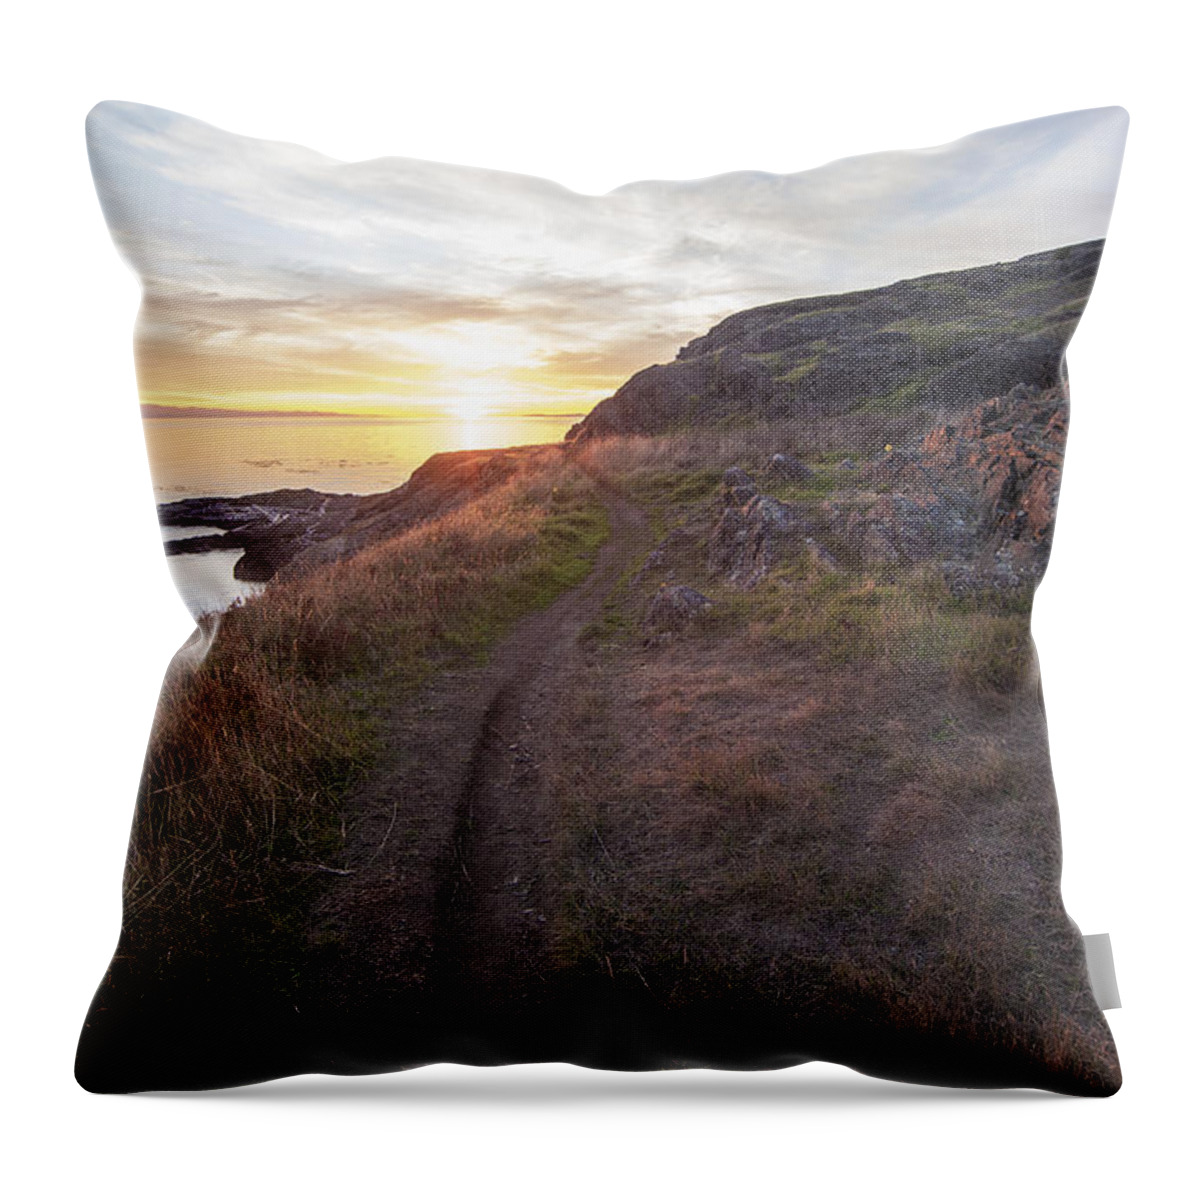 Sunset Throw Pillow featuring the photograph A Walk To Iceberg Point by Matt McDonald